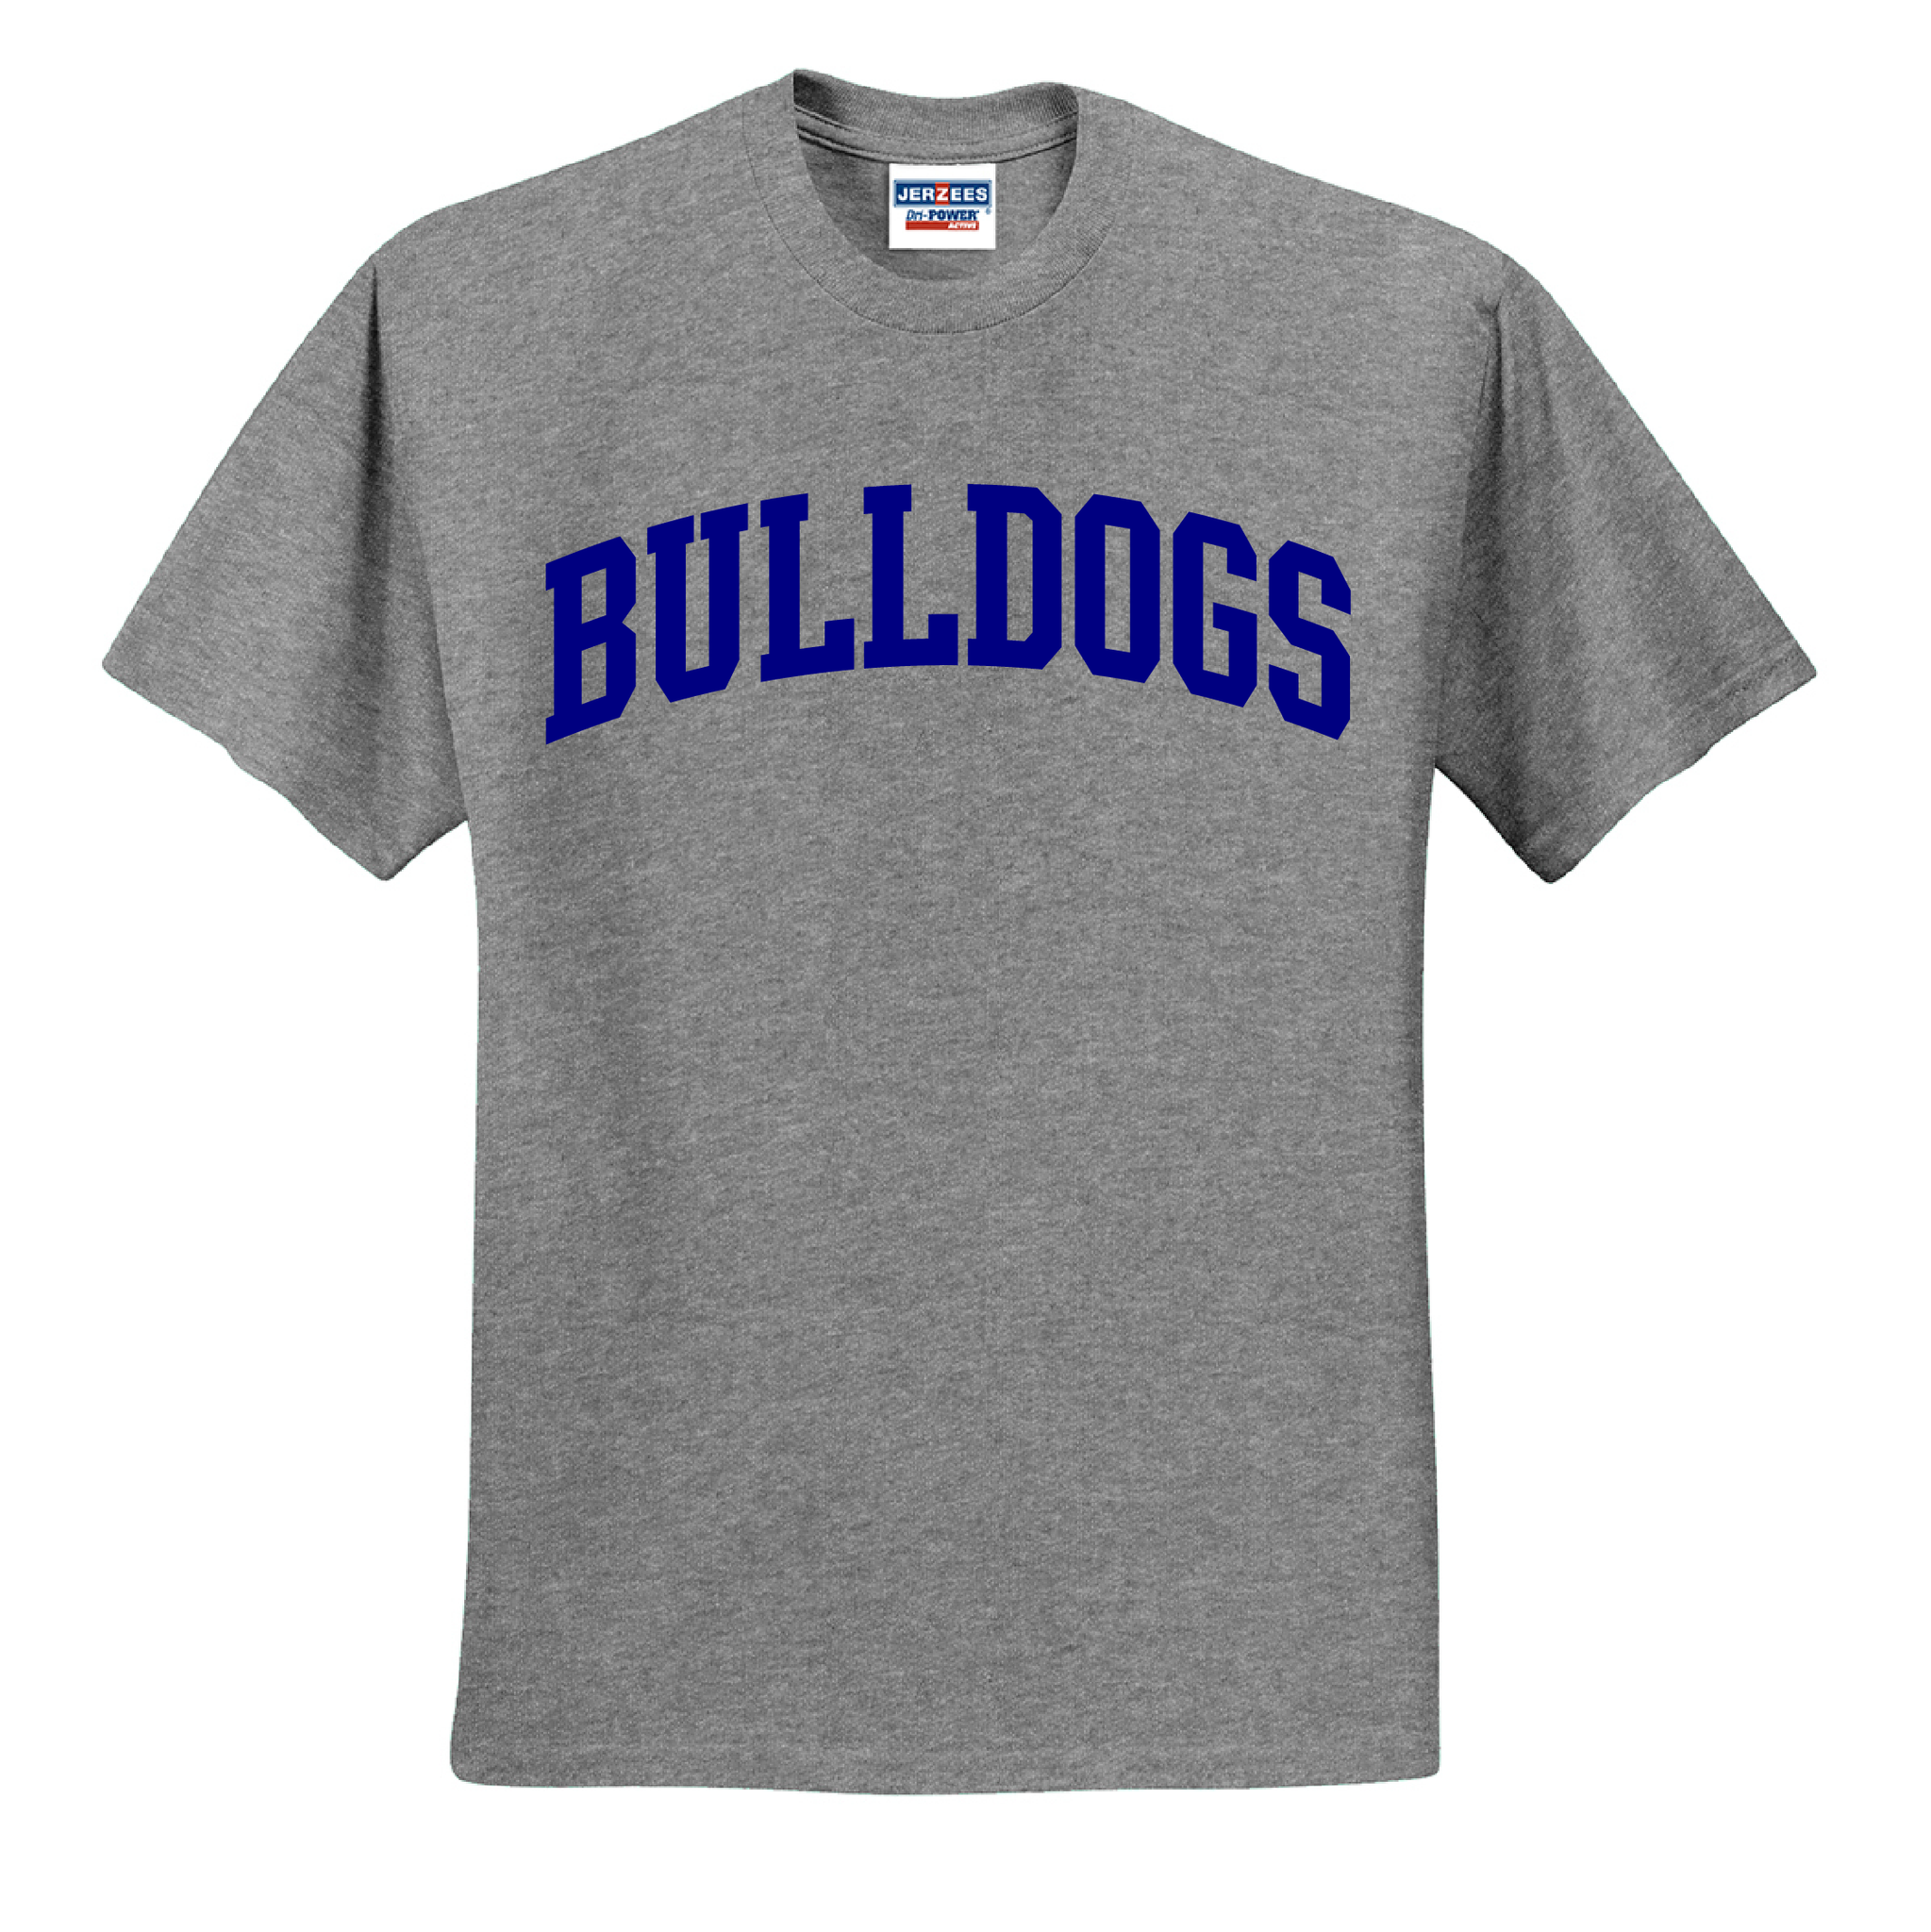 Fairview Bulldogs Team T-Shirt